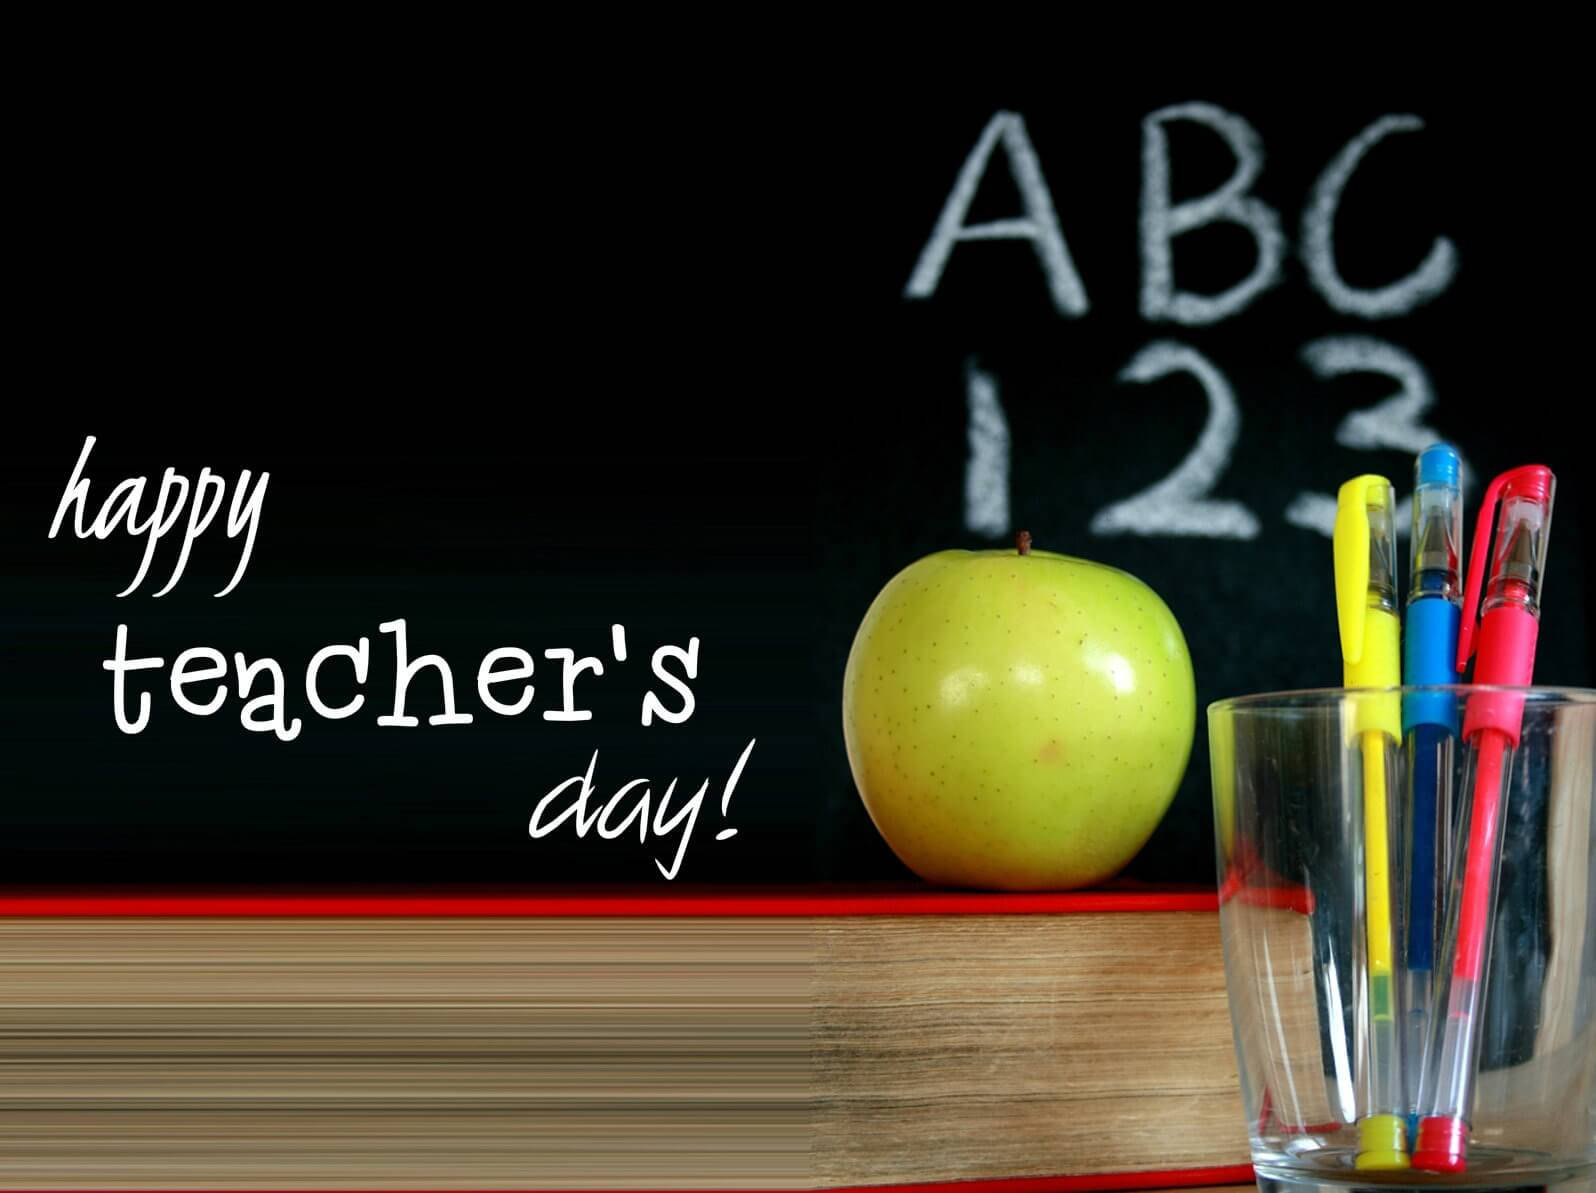 Happy Teachers' Day Apple Pens